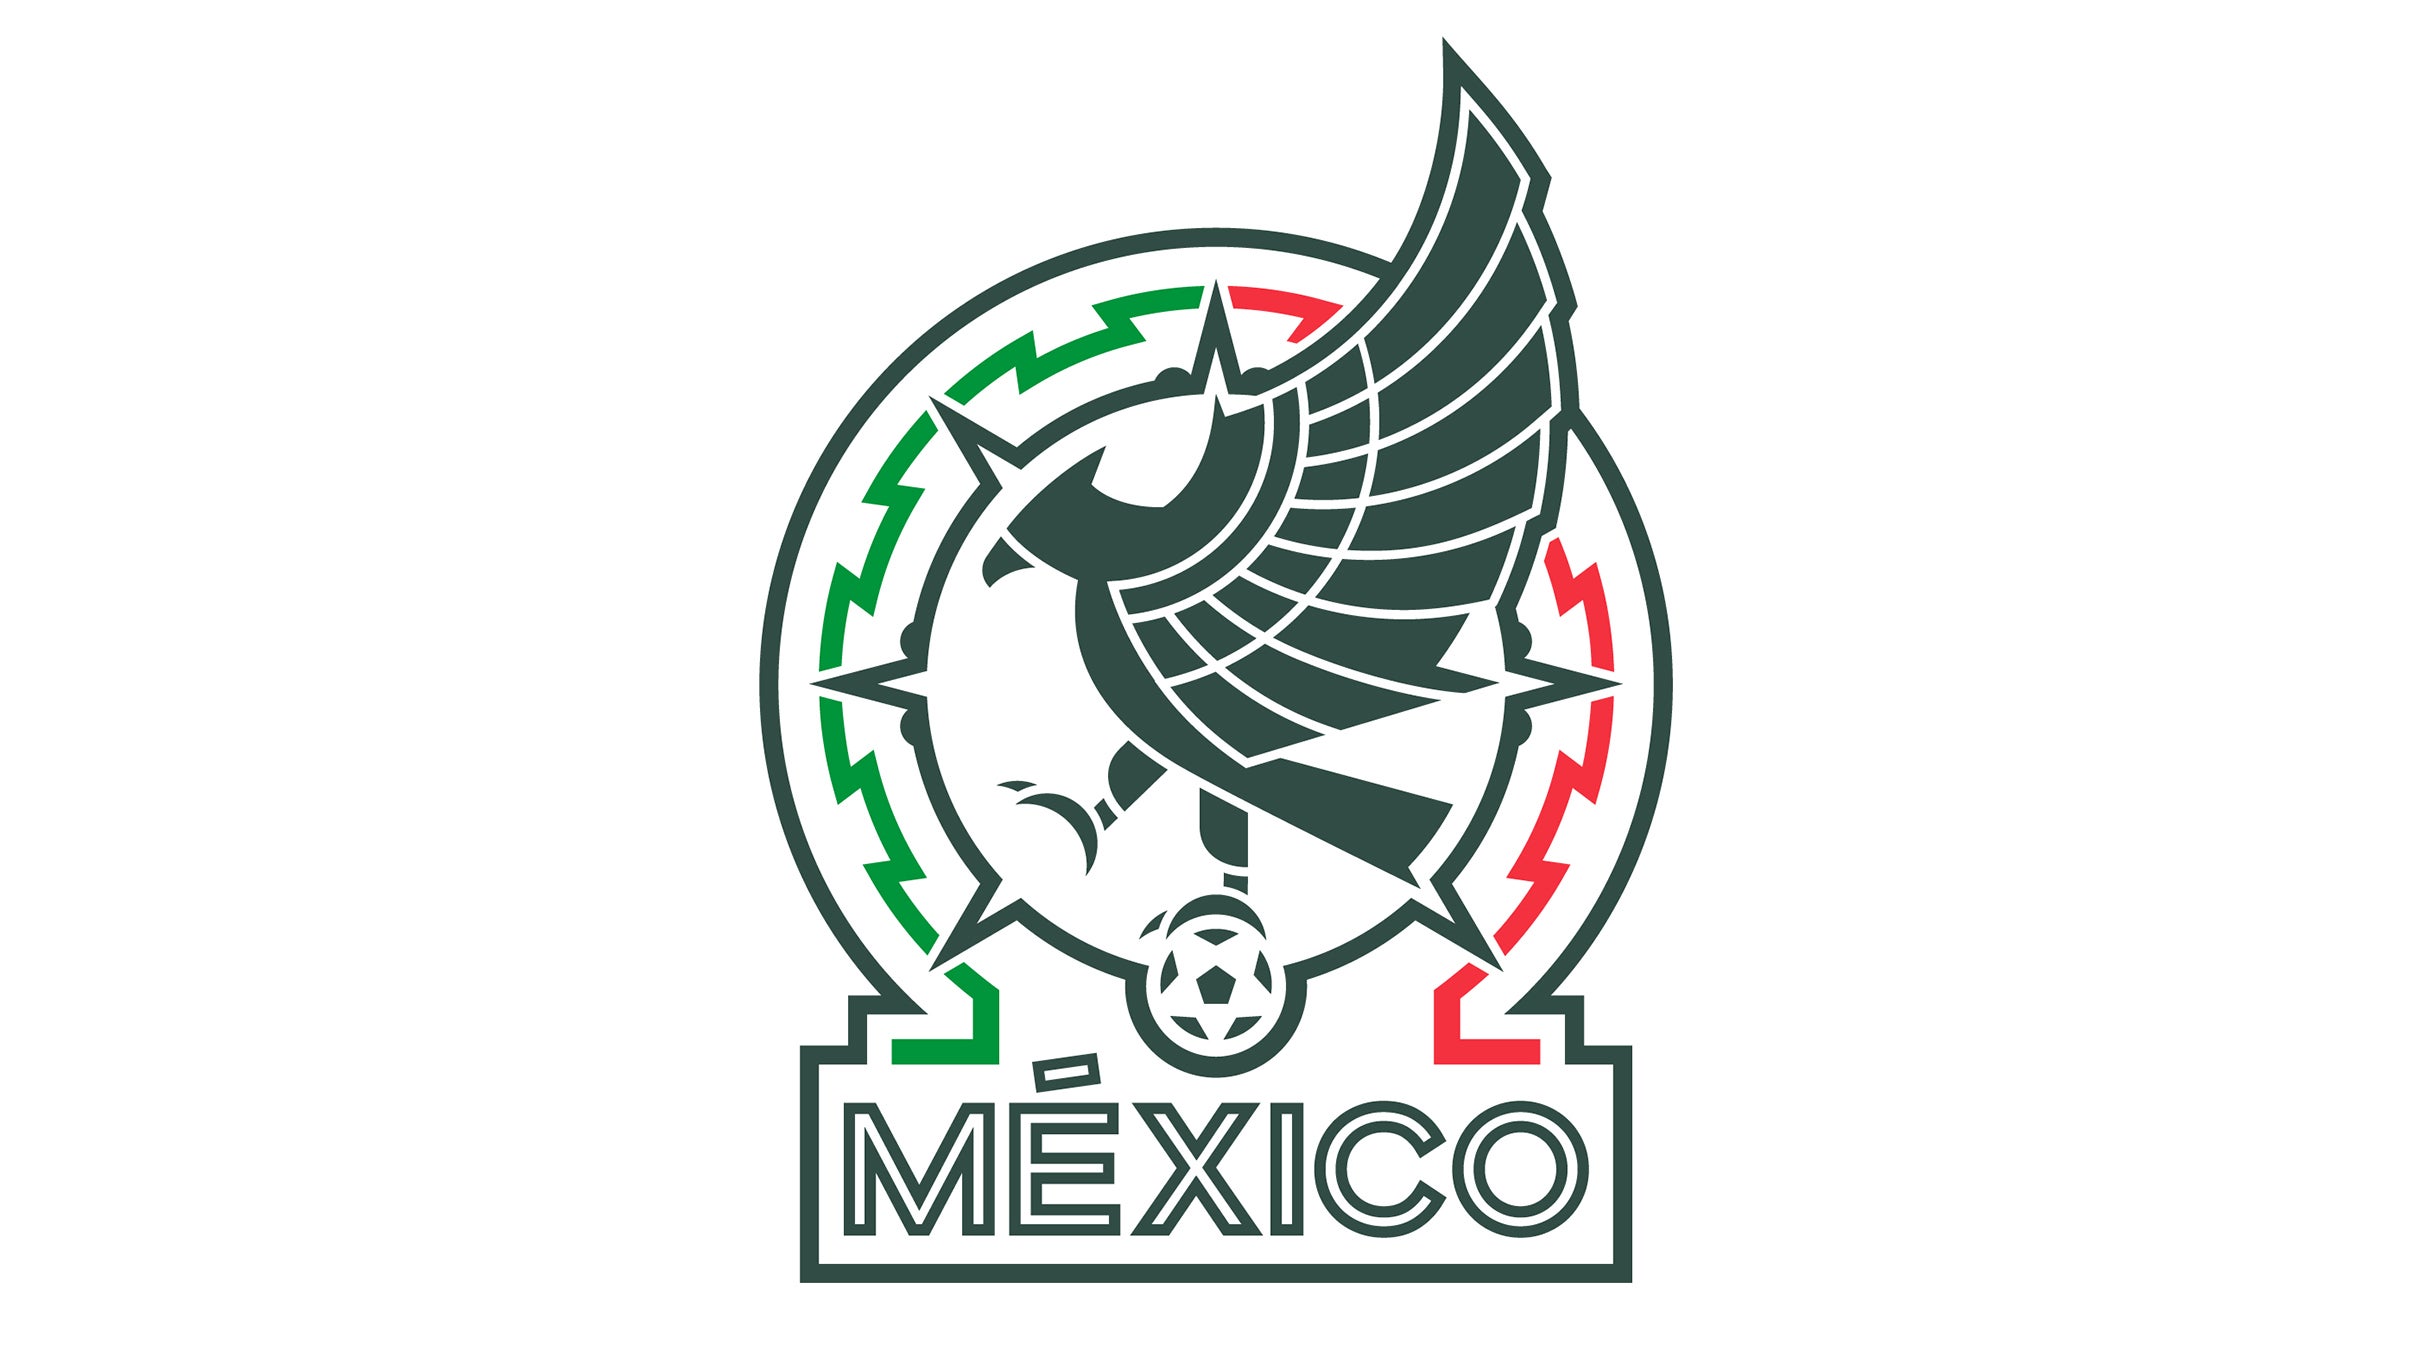 Mexico vs. Bolivia presales in Chicago